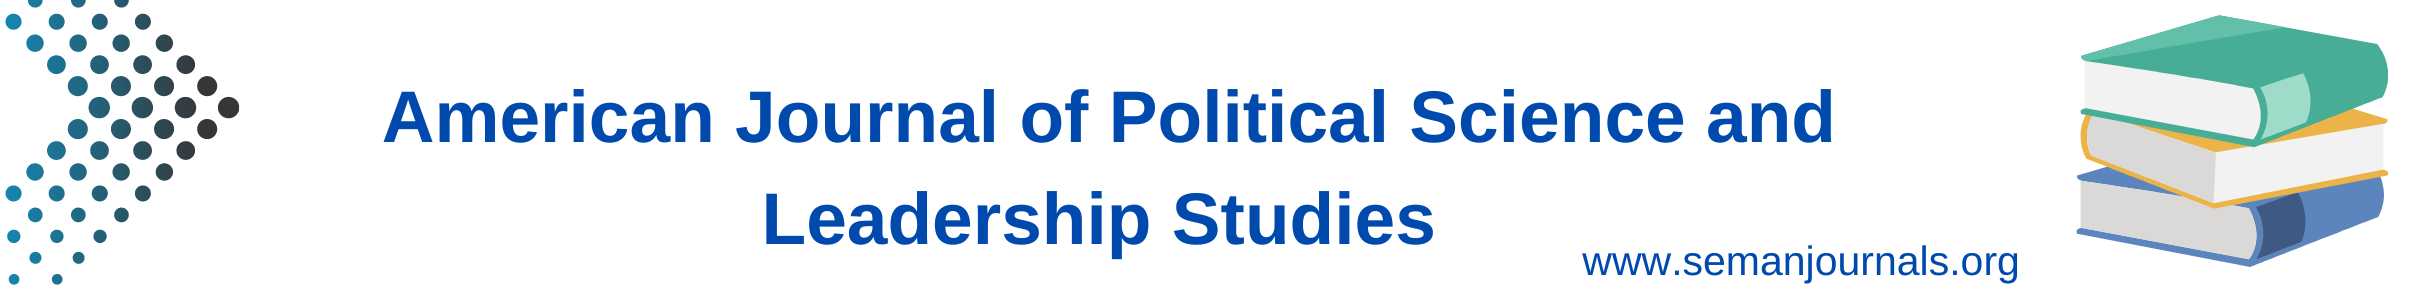 American Journal of Political Science and Leadership Studies